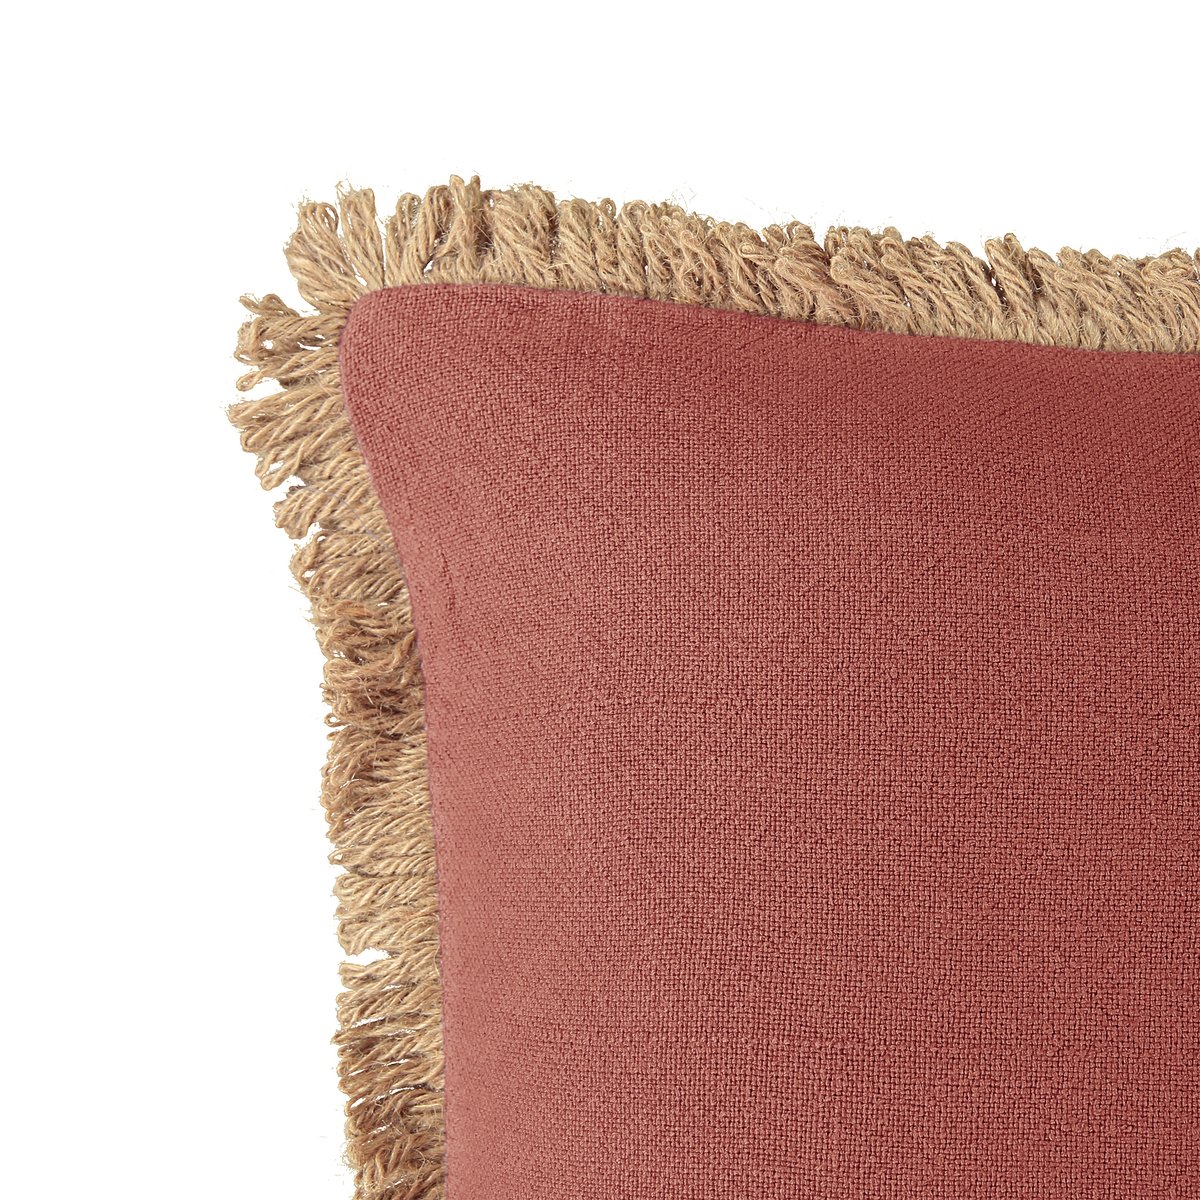 Чехол La Redoute На подушку из джута Jutty 50 x 30 см красный, размер 50 x 30 см - фото 4